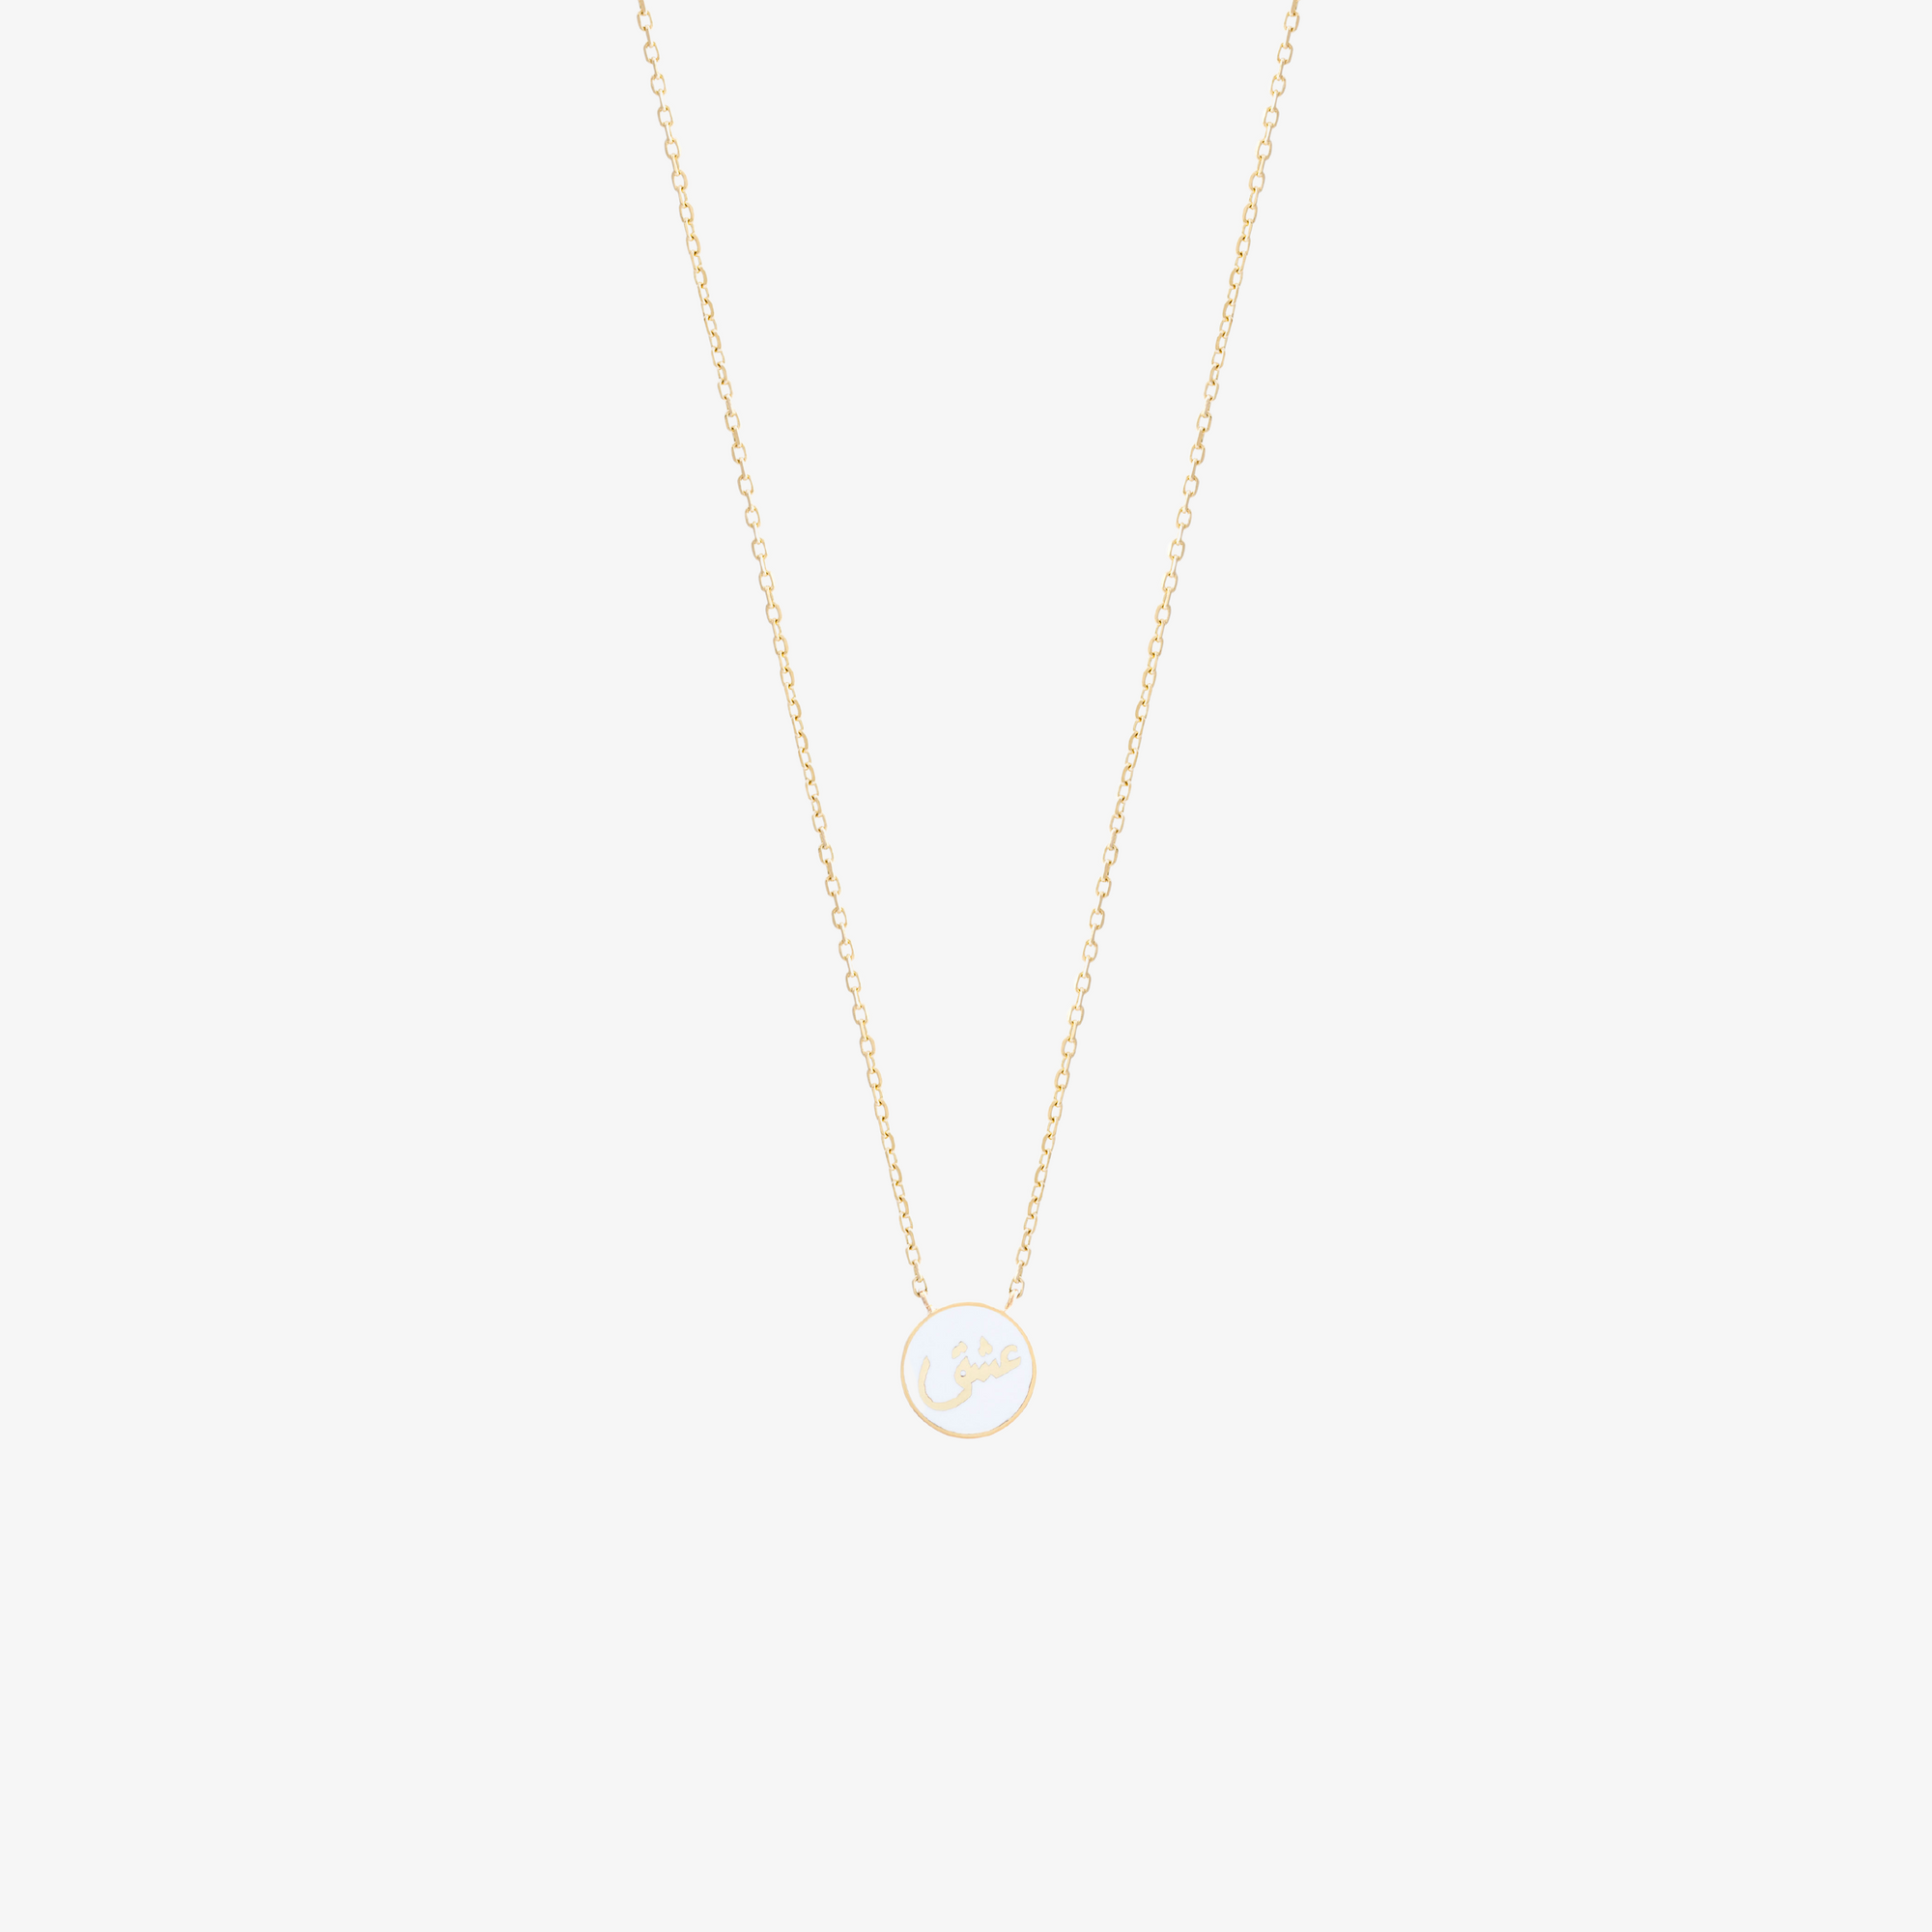 OULA - 18K Gold Round Shaped "Oshq" Necklace